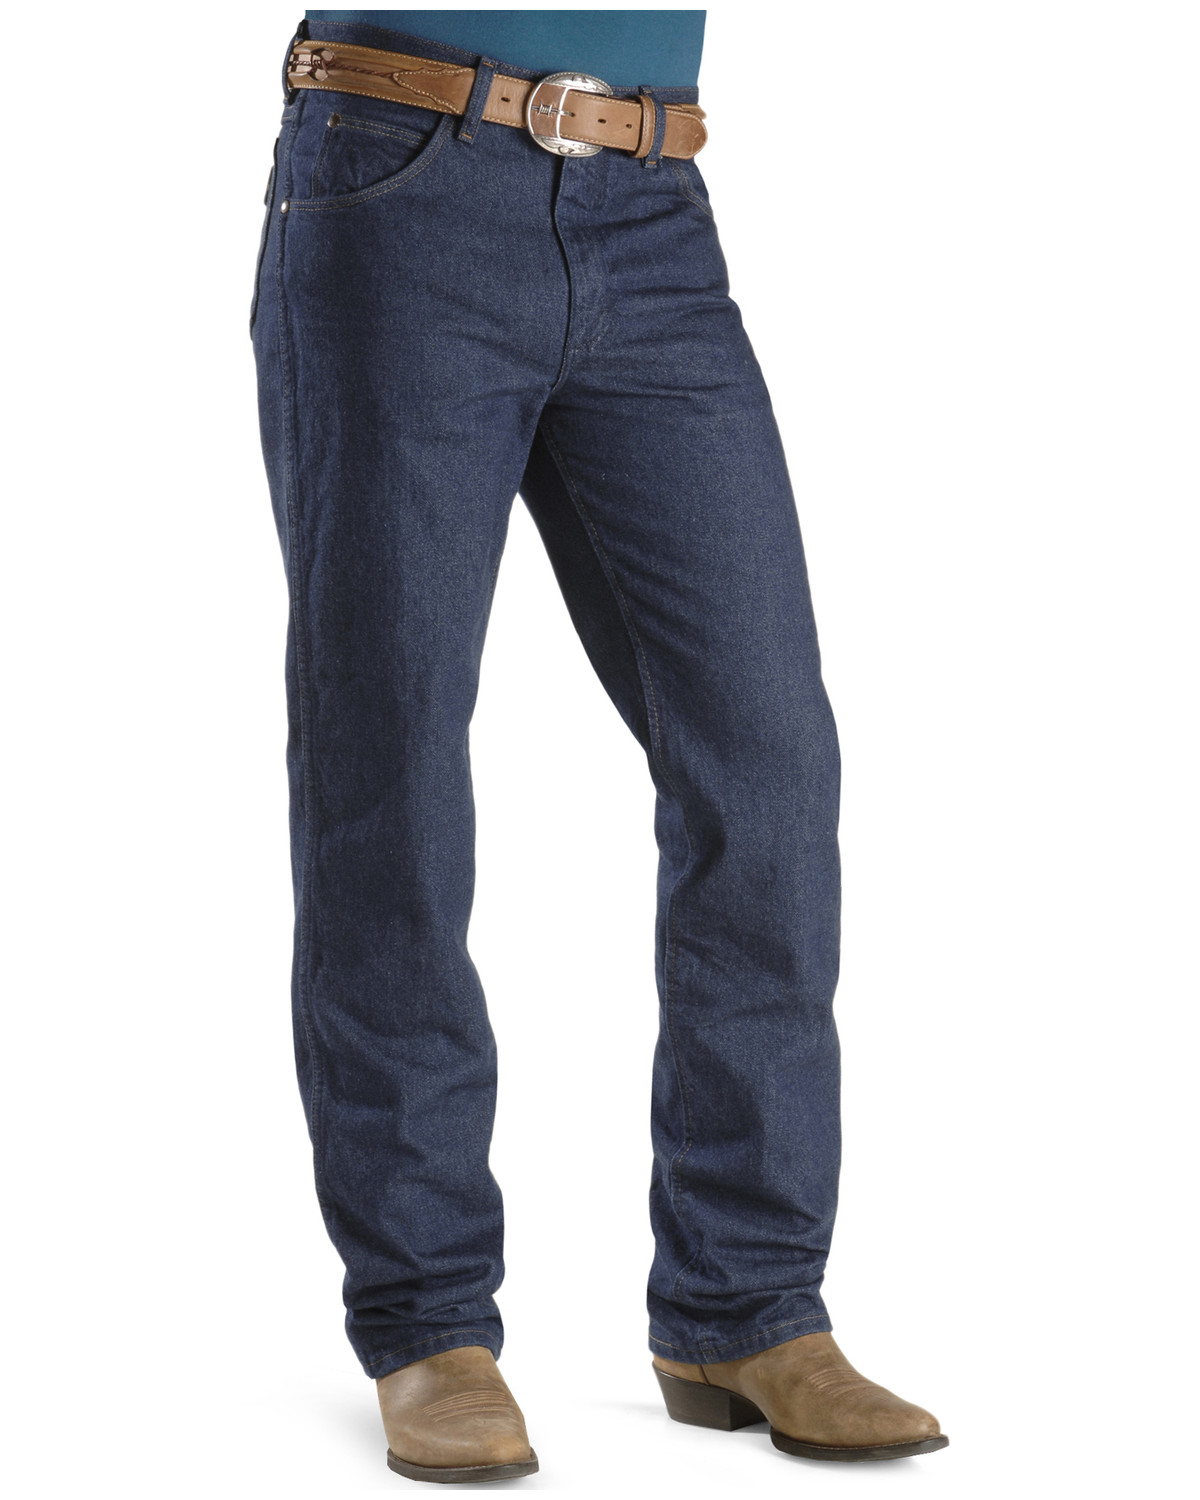 Wrangler Jeans - Cowboy Cut 36 MWZ Slim Fit | Sheplers